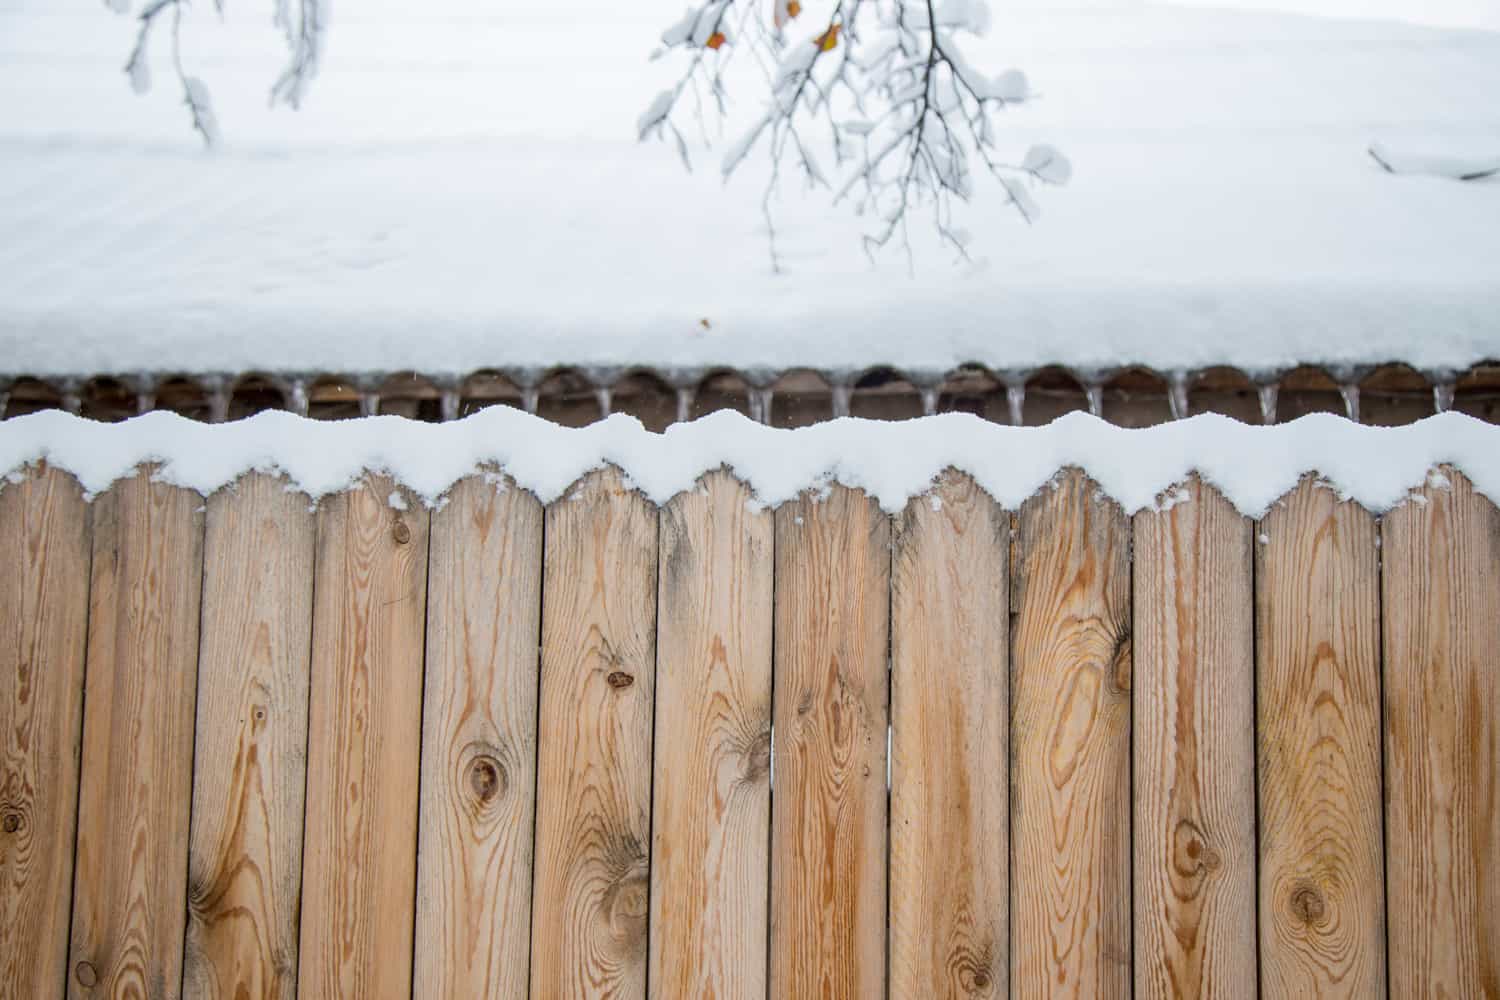 Snow on fence.
